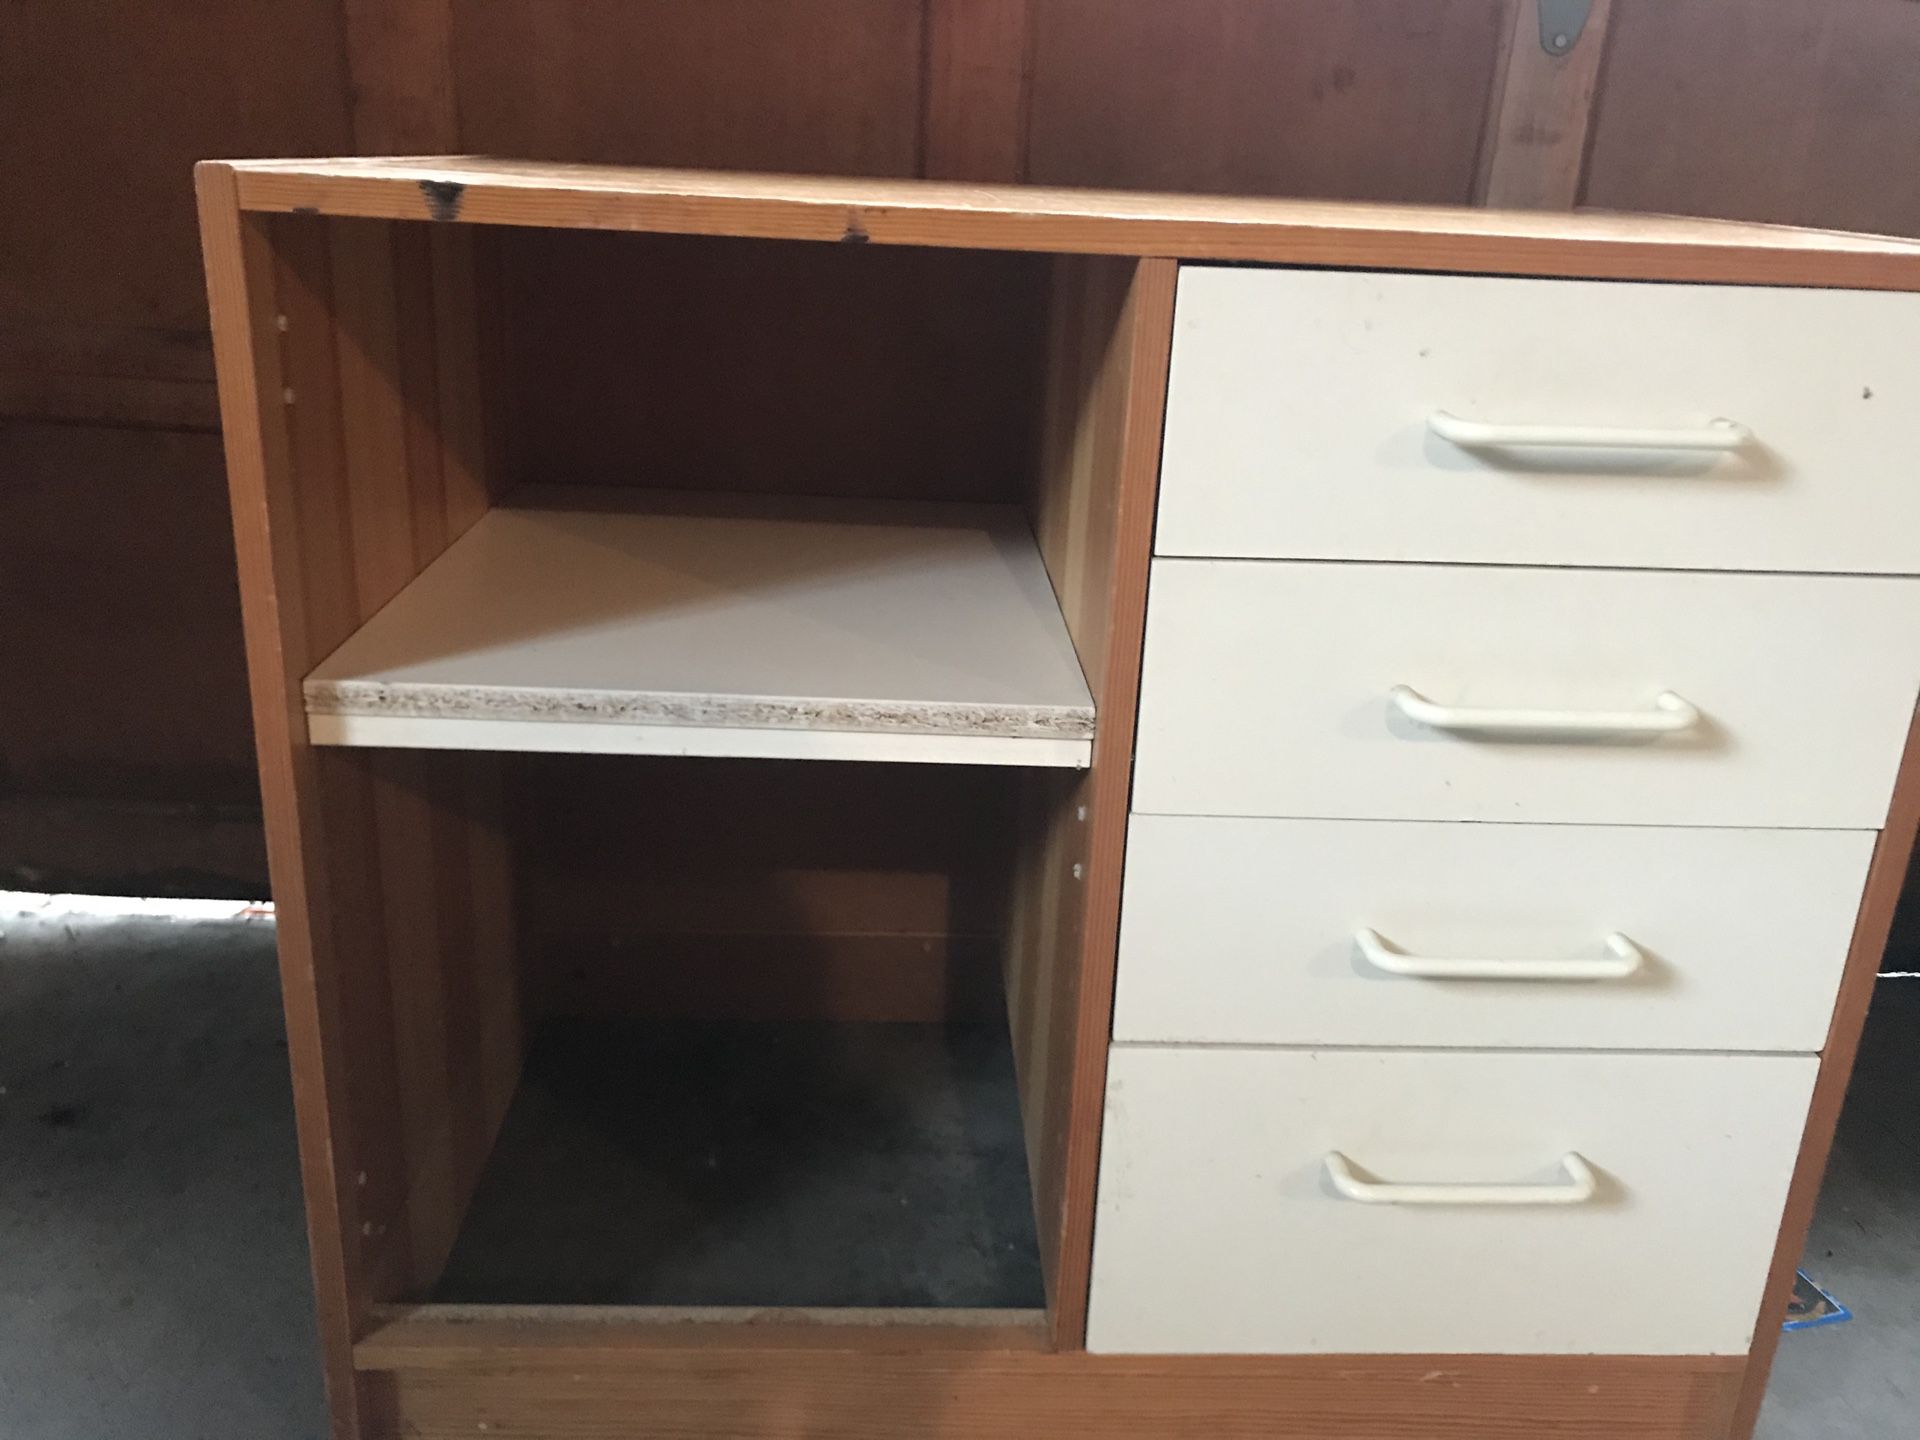 Free cabinet / shelving storage unit